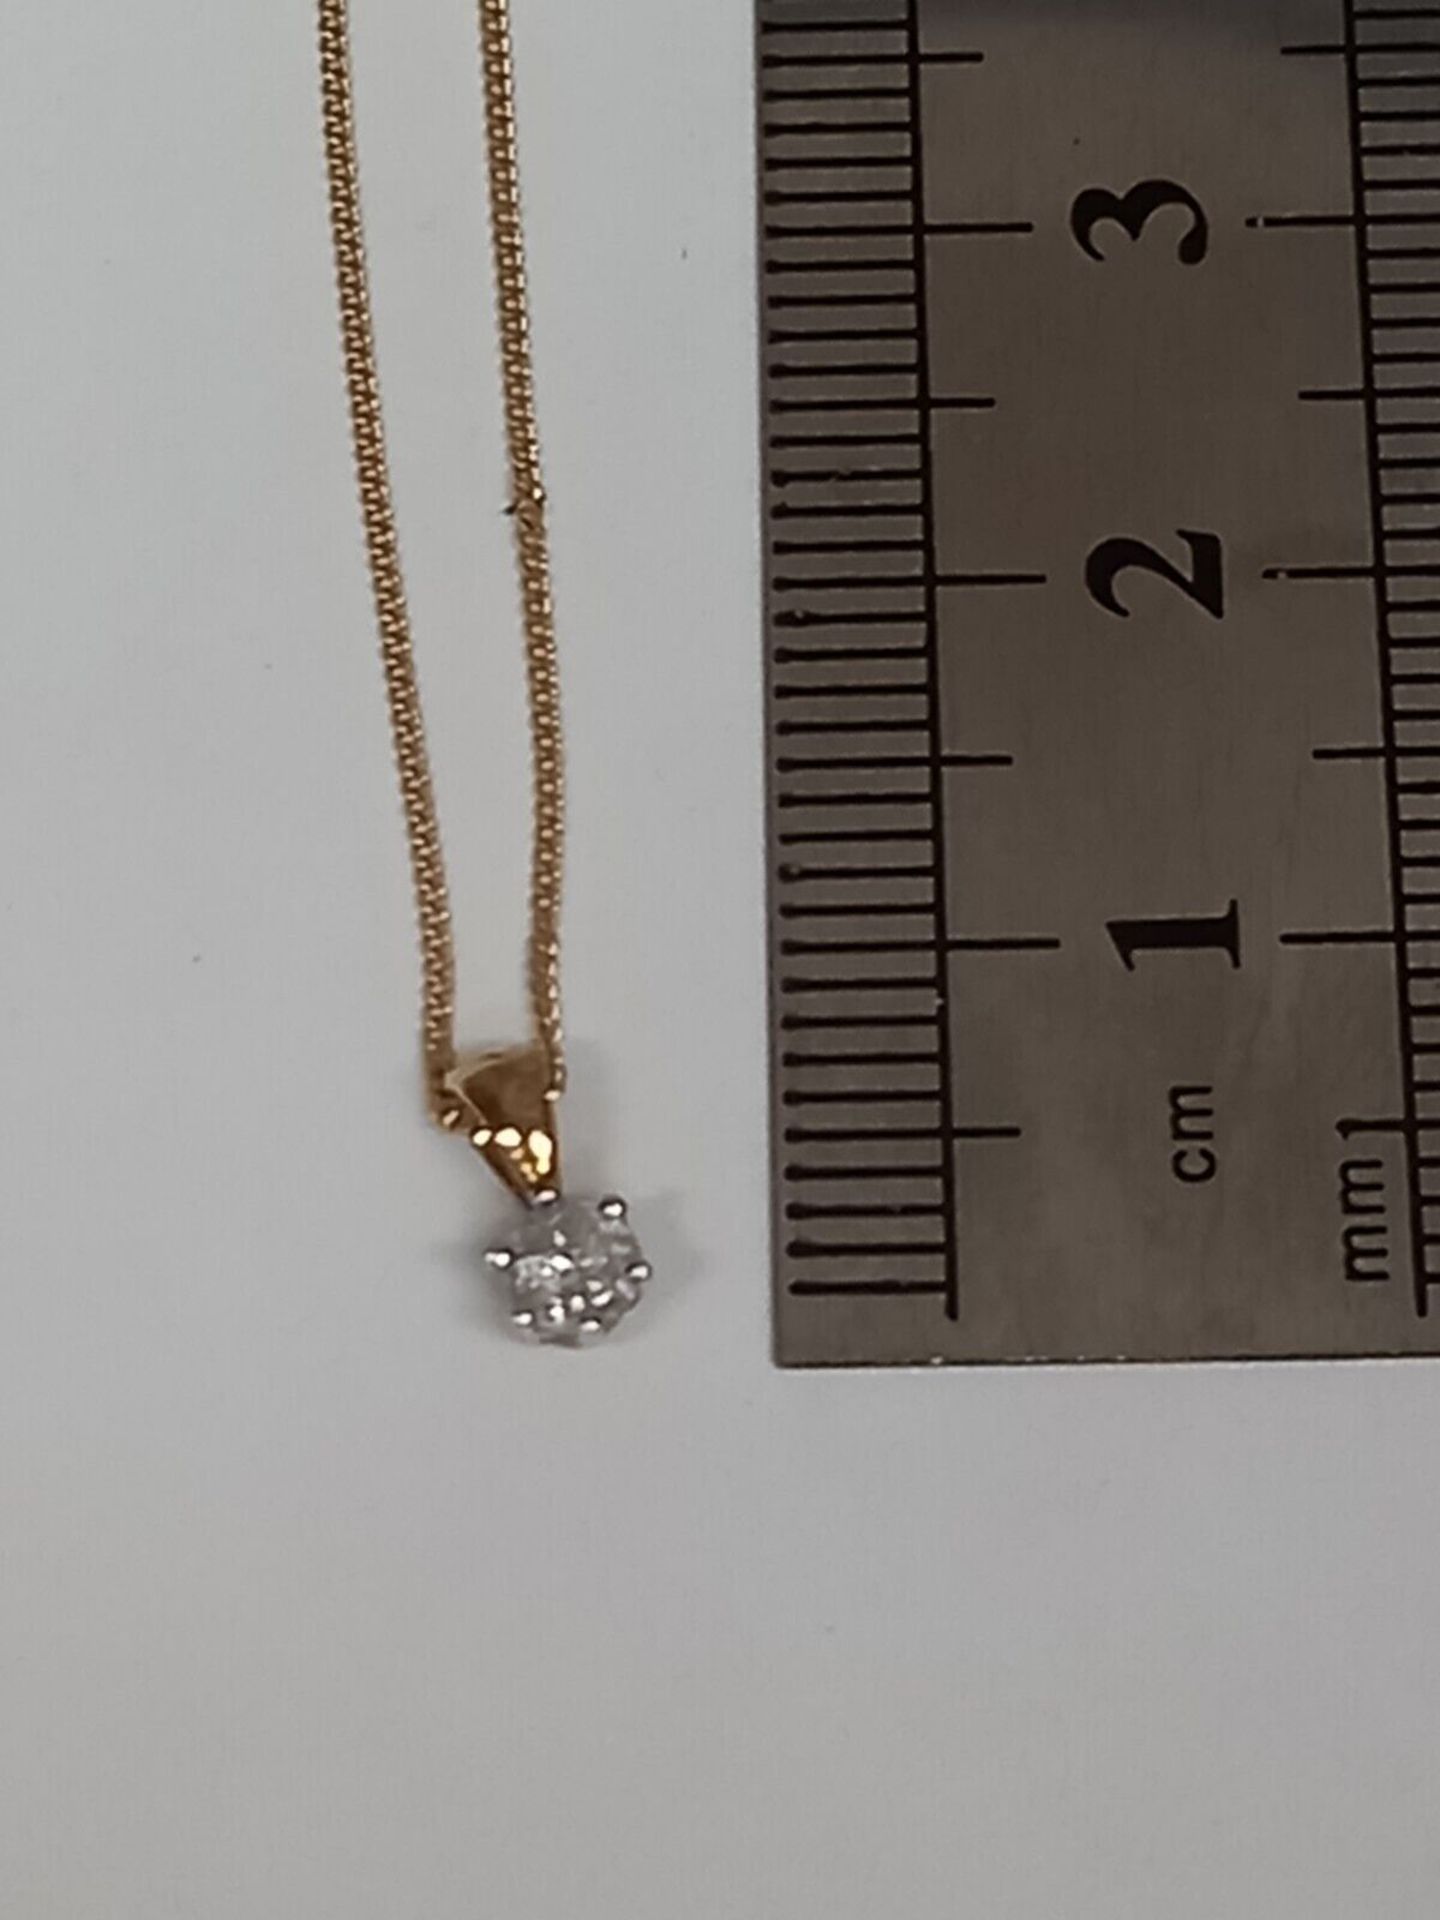 0.15CT DIAMOND PENDANT & CHAIN 9CT YELLOW GOLD - Image 3 of 3